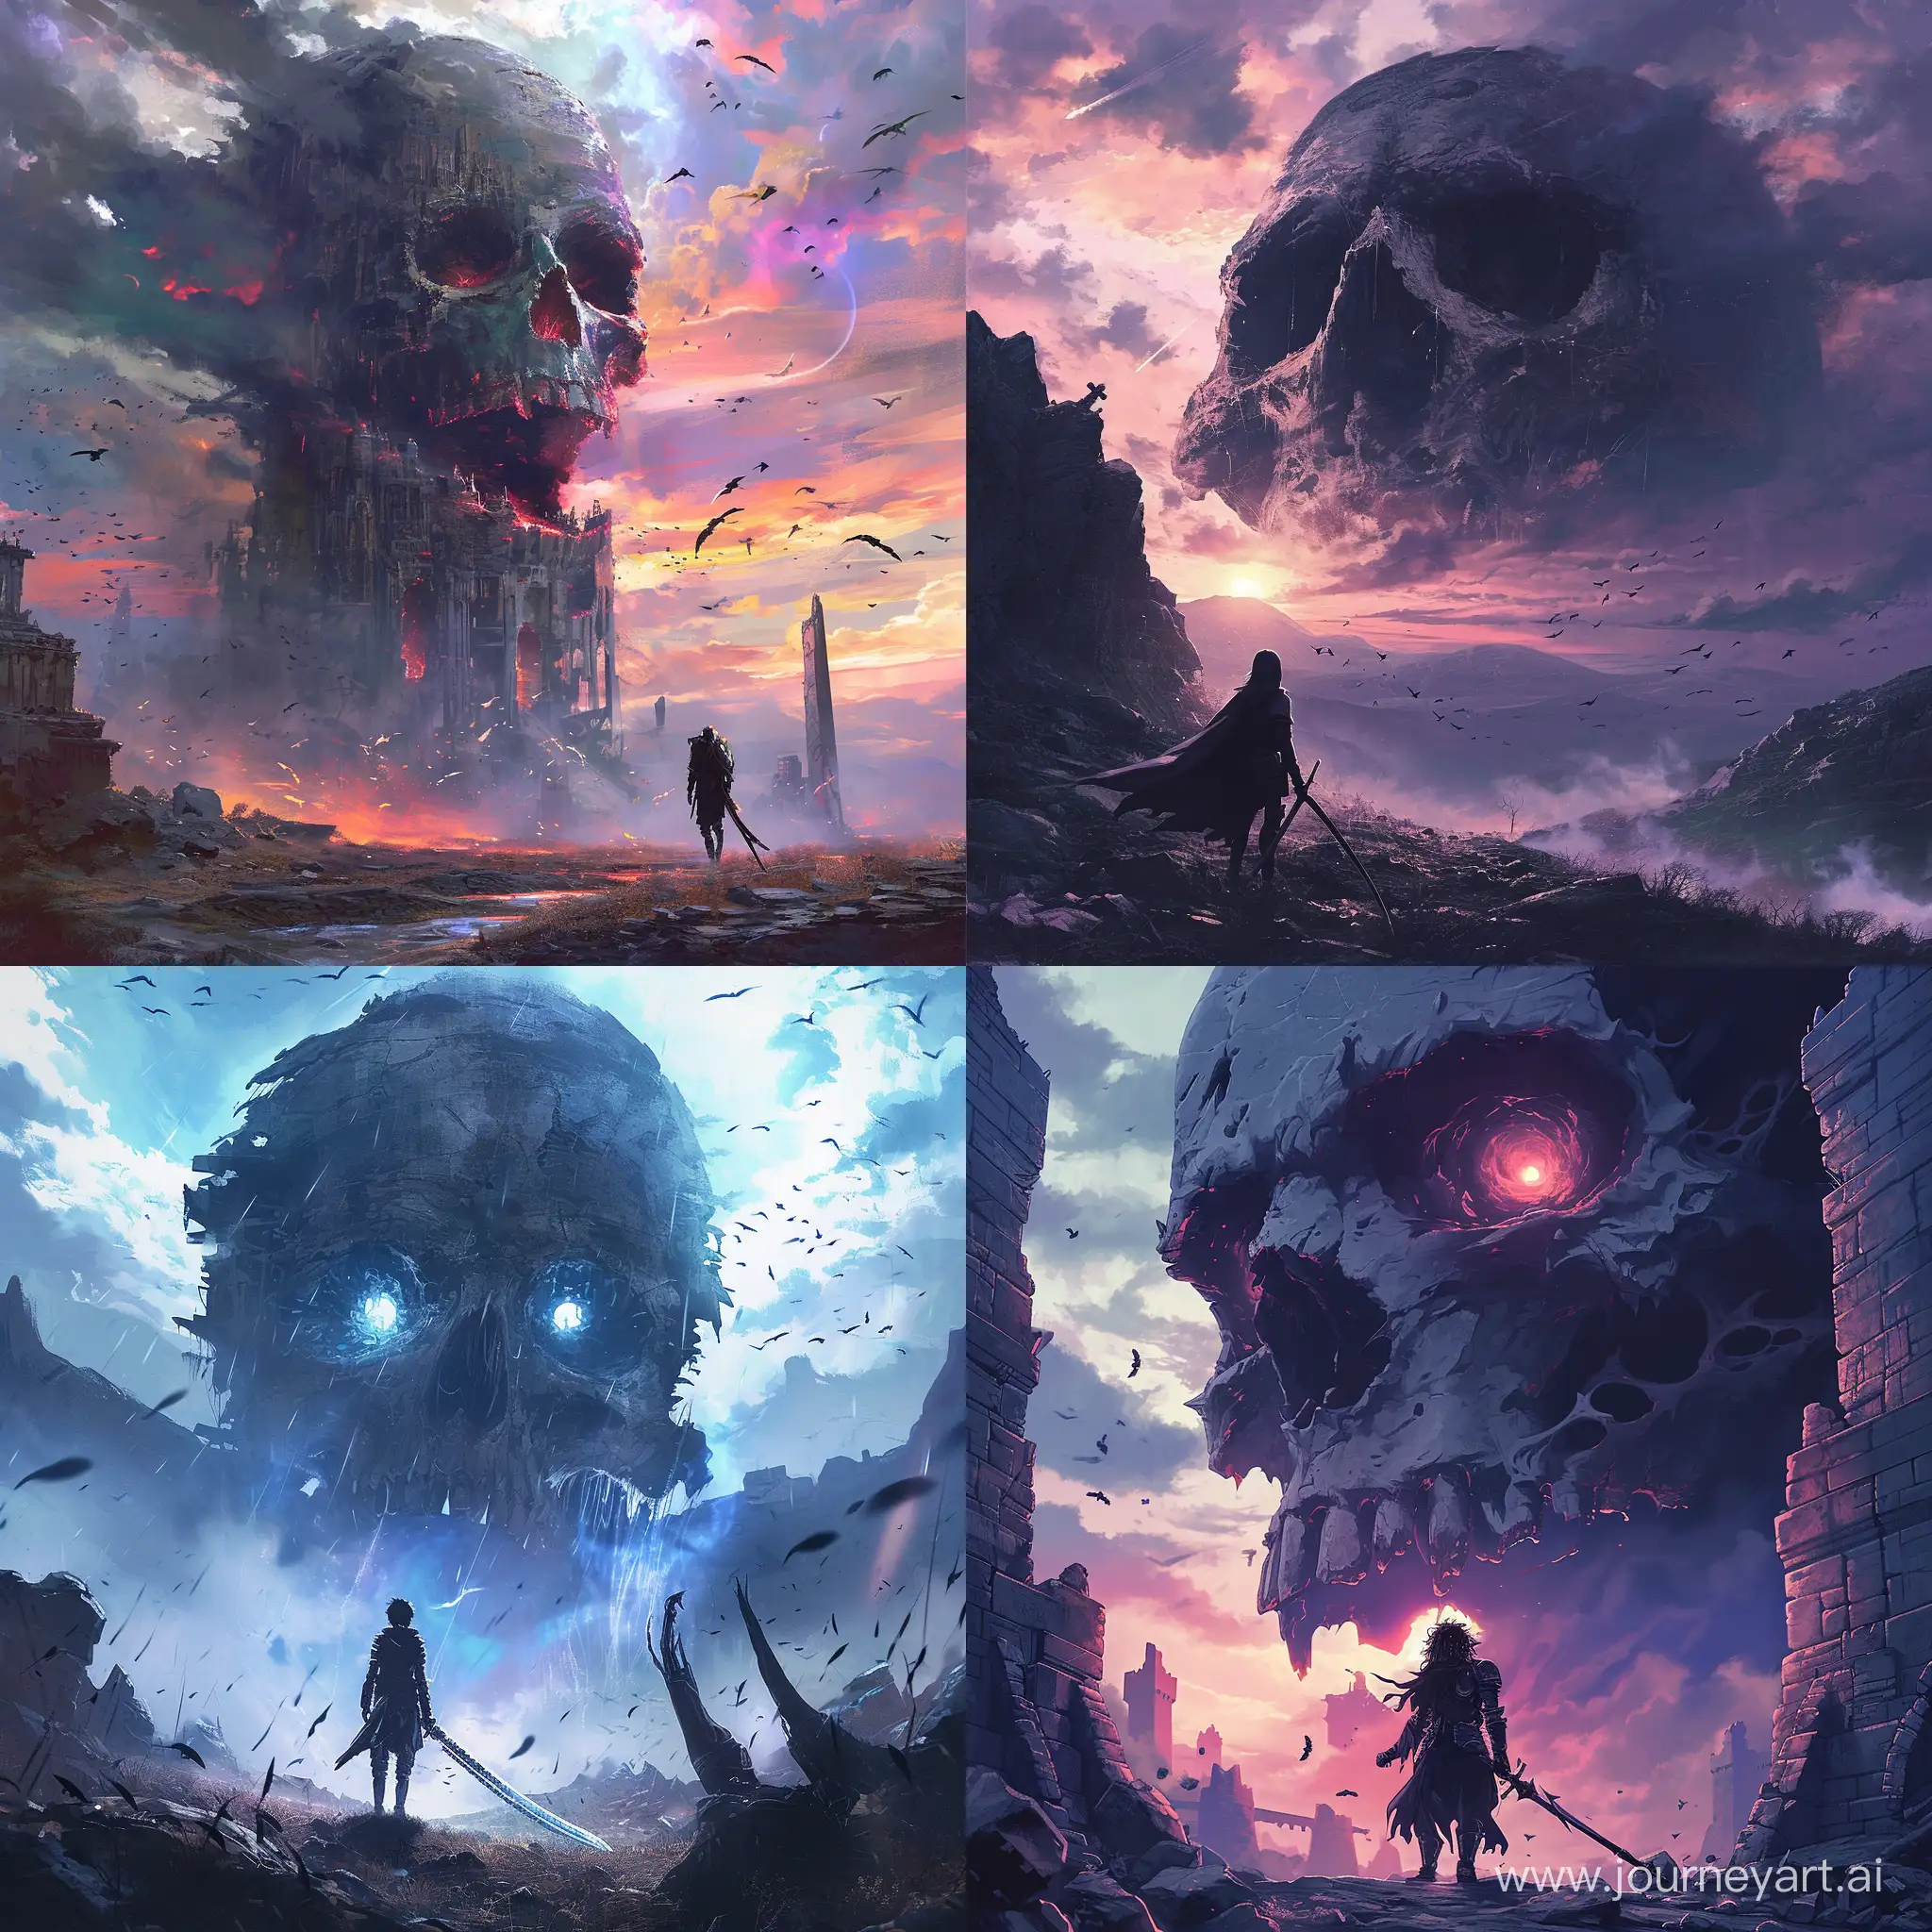 Cute-Anime-Warrior-Confronts-Giant-Skull-in-Desolate-Dusk-Landscape